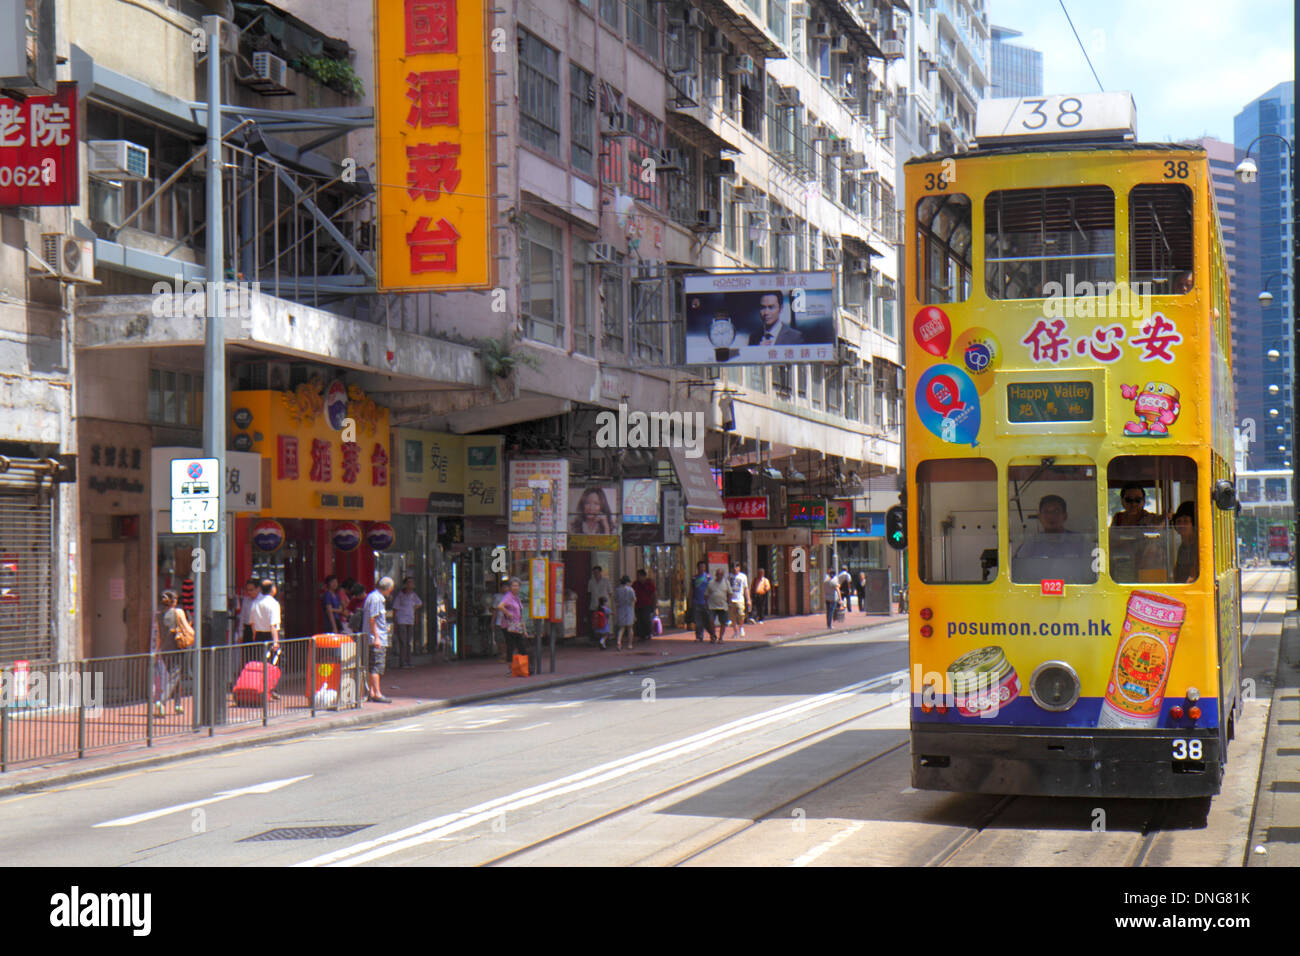 Hong Kong Cina, Hong Kong, Asia, cinese, orientale, isola, North Point, King's Road, tram a due piani, cantonese caratteri cinesi hànzì pinyin, HK130924 Foto Stock